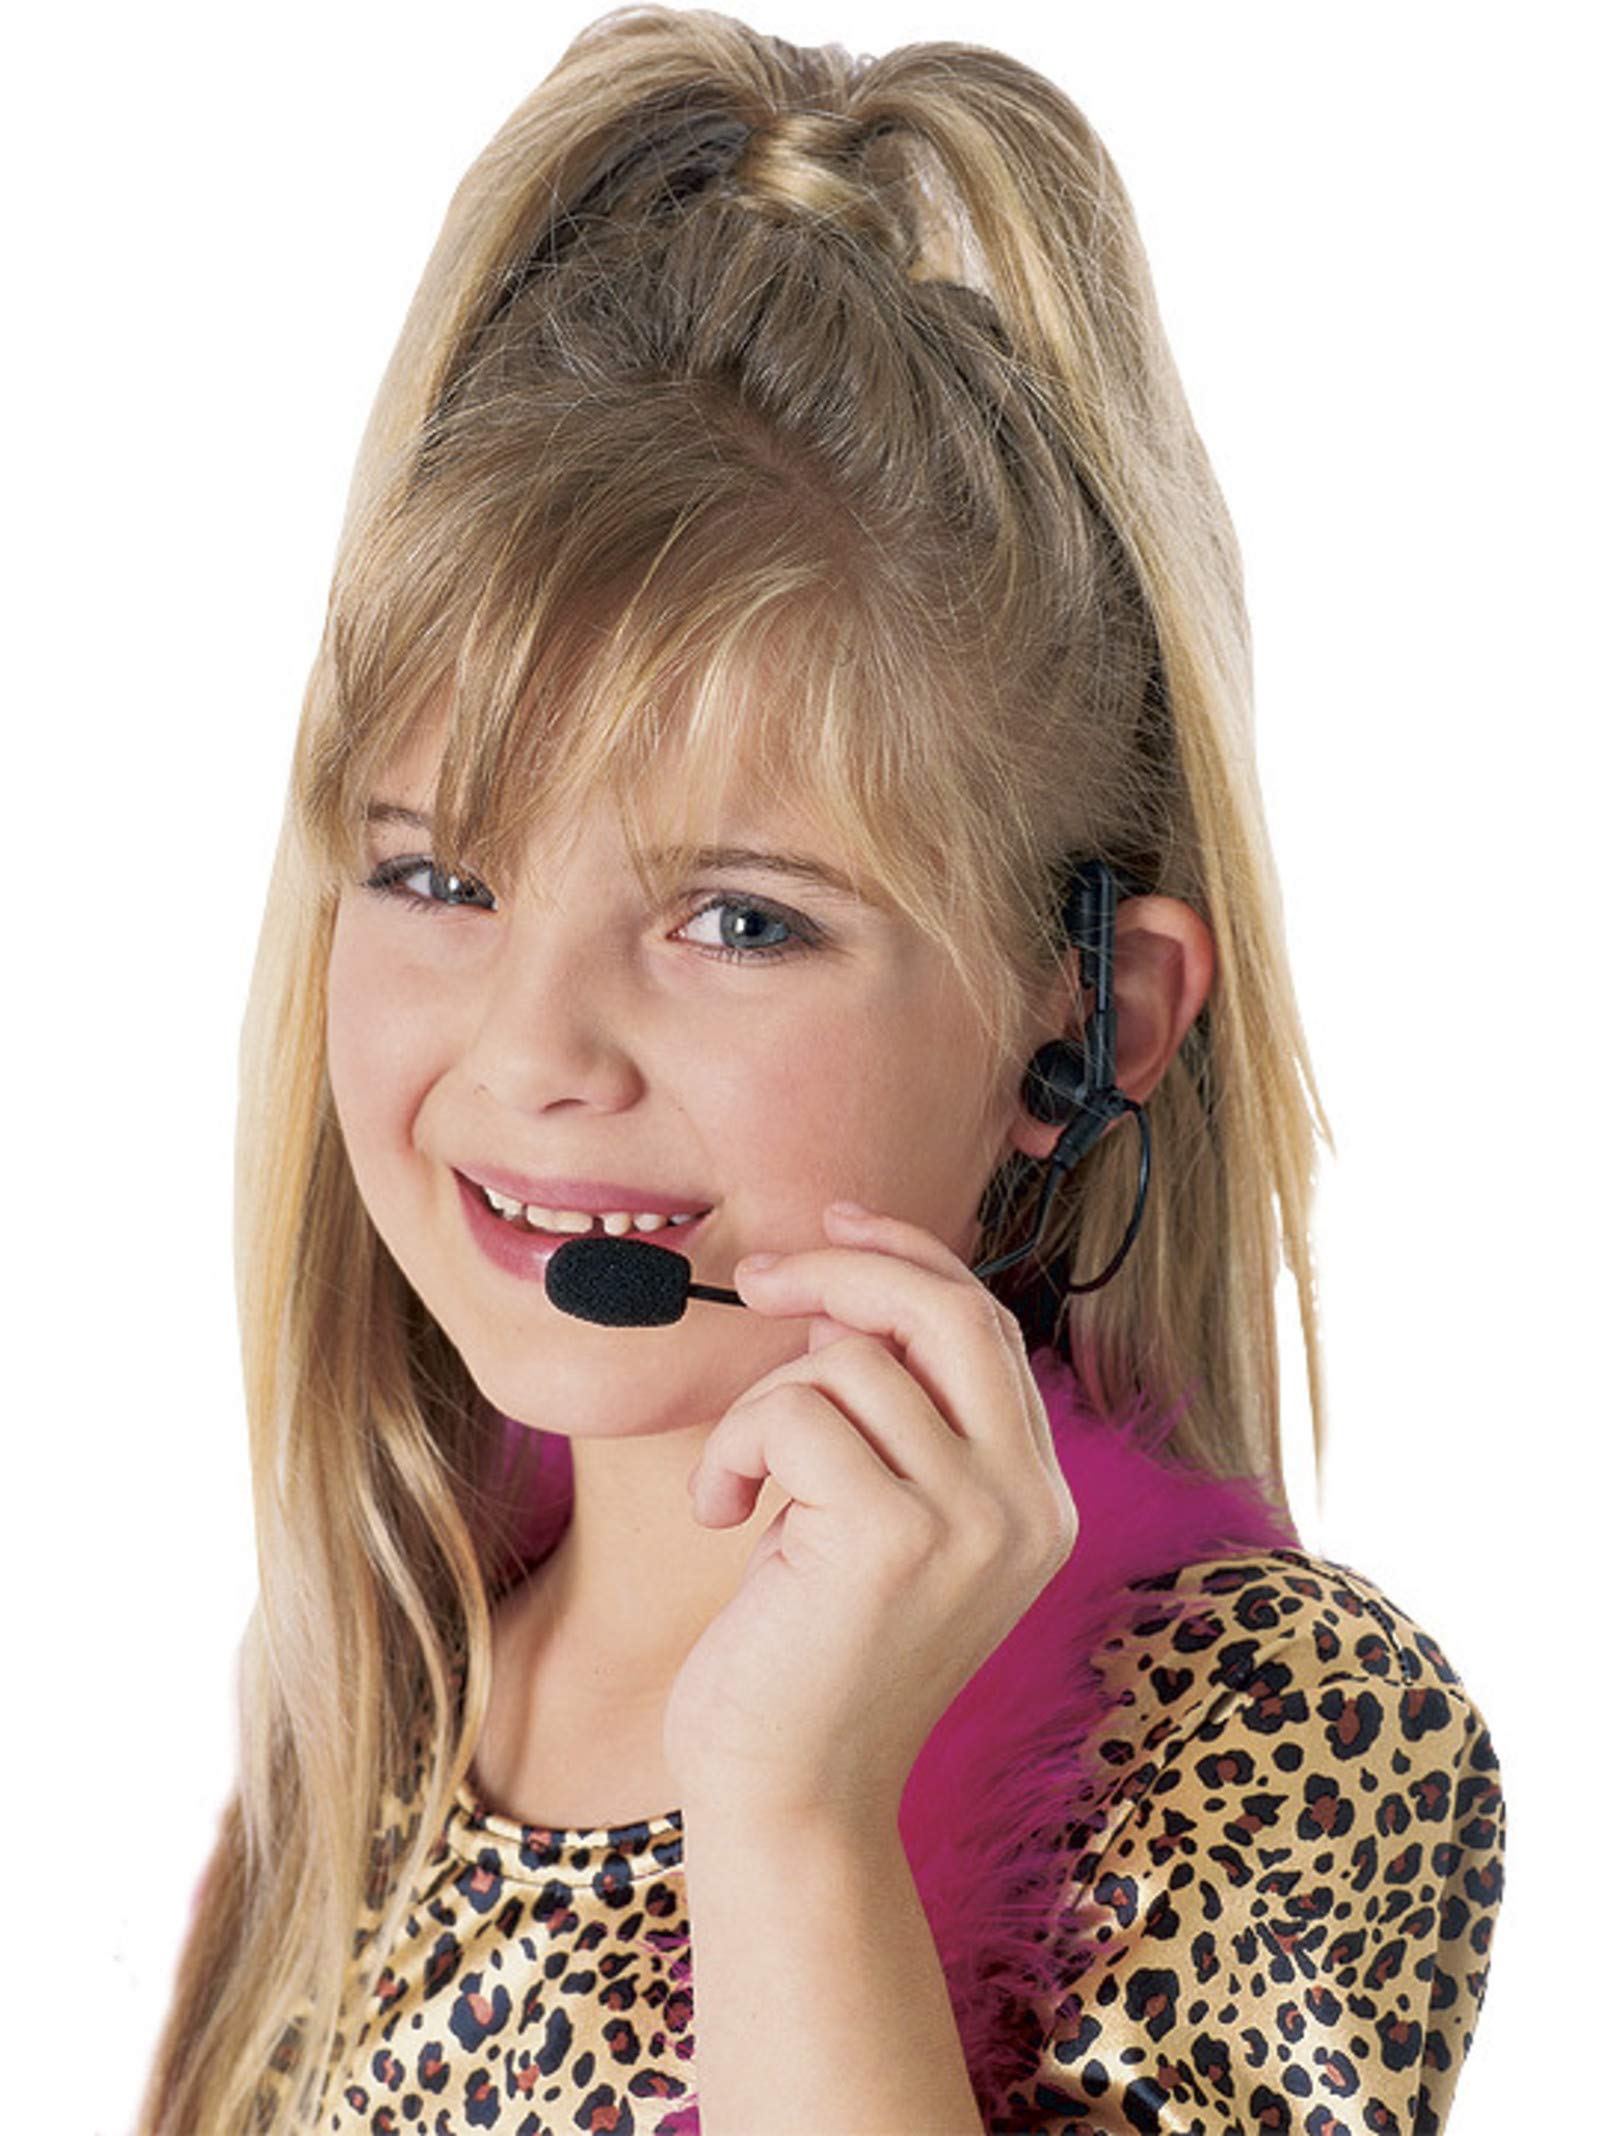 Rubie’s Rock Star Mic/Headset, Microphone Costume Accessory with Glitter Make-Up,Black